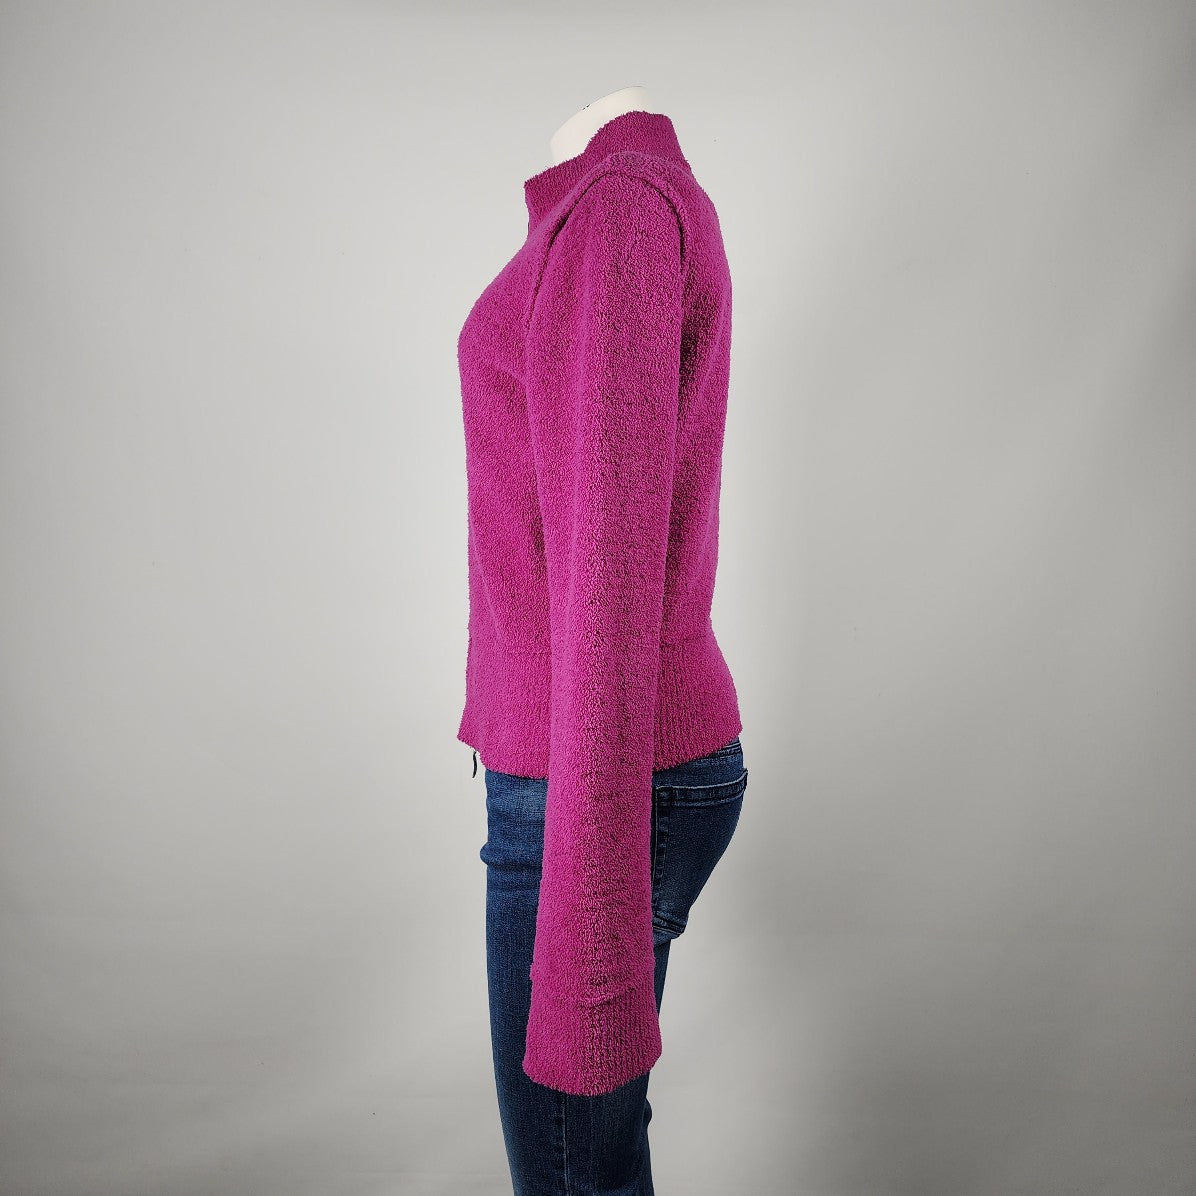 Julep Pink Zip Up Fuzzy Jacket Cardigan Size L/XL